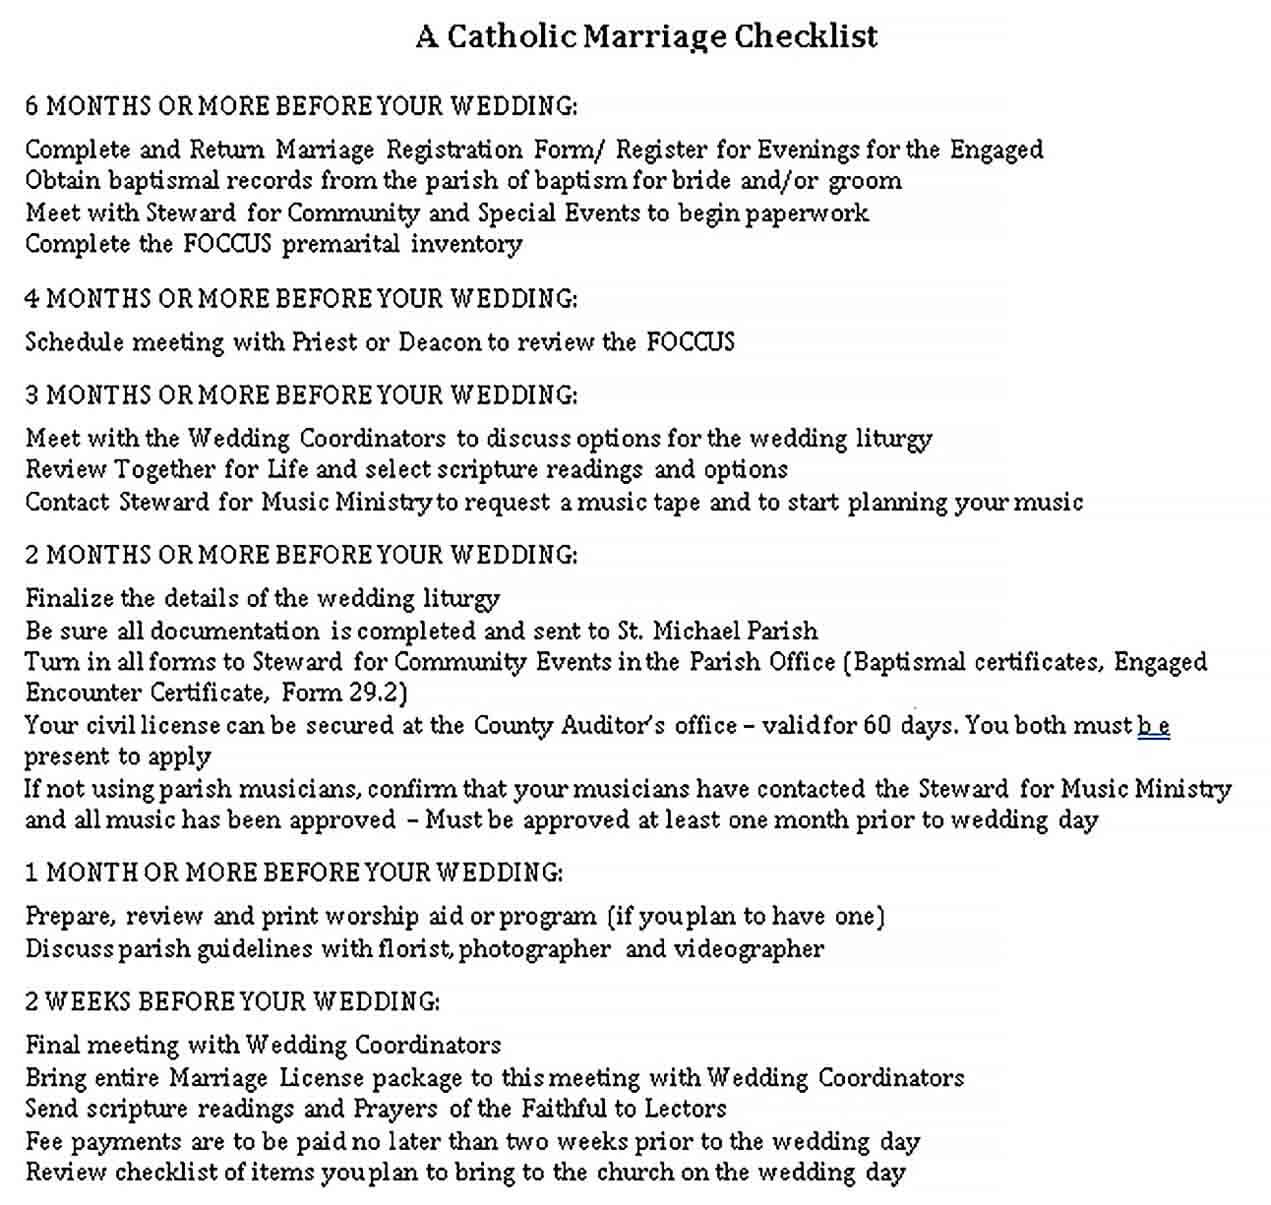 Sample Catholic Wedding Checklist 1